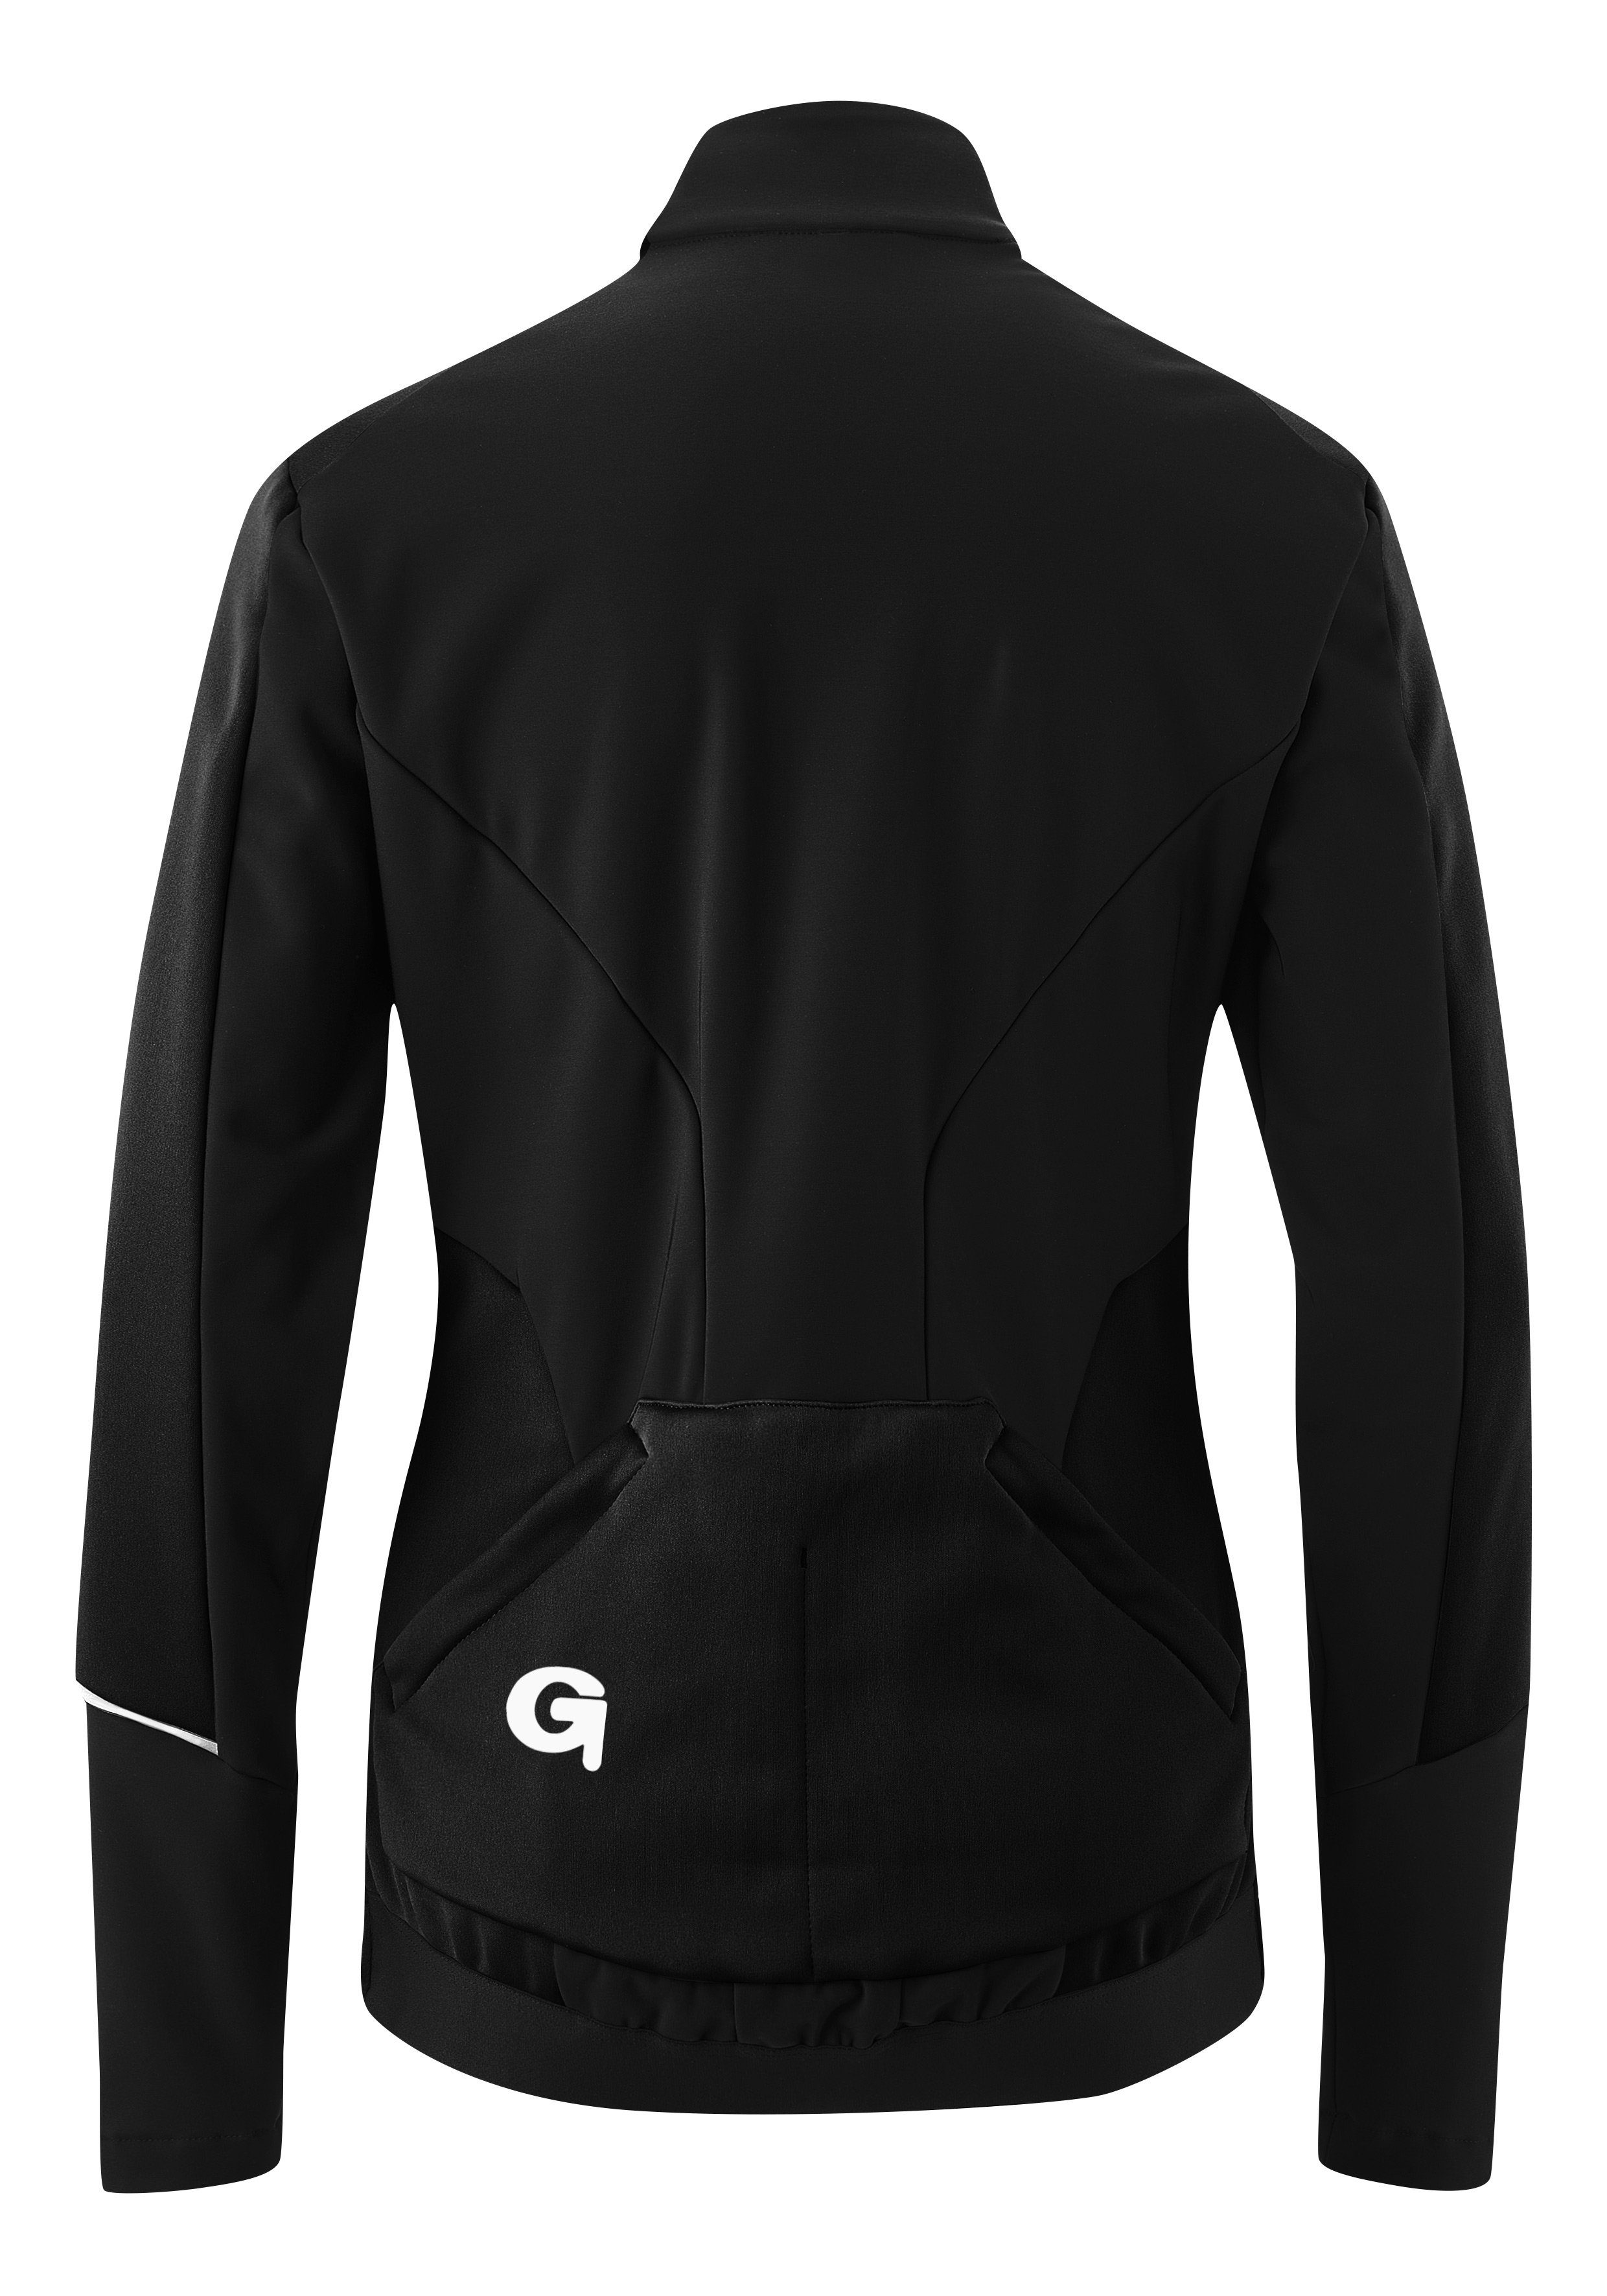 Fahrradjacke Gonso schwarz atmungsaktiv FURIANI und Softshell-Jacke, wasserabweisend Windjacke Damen